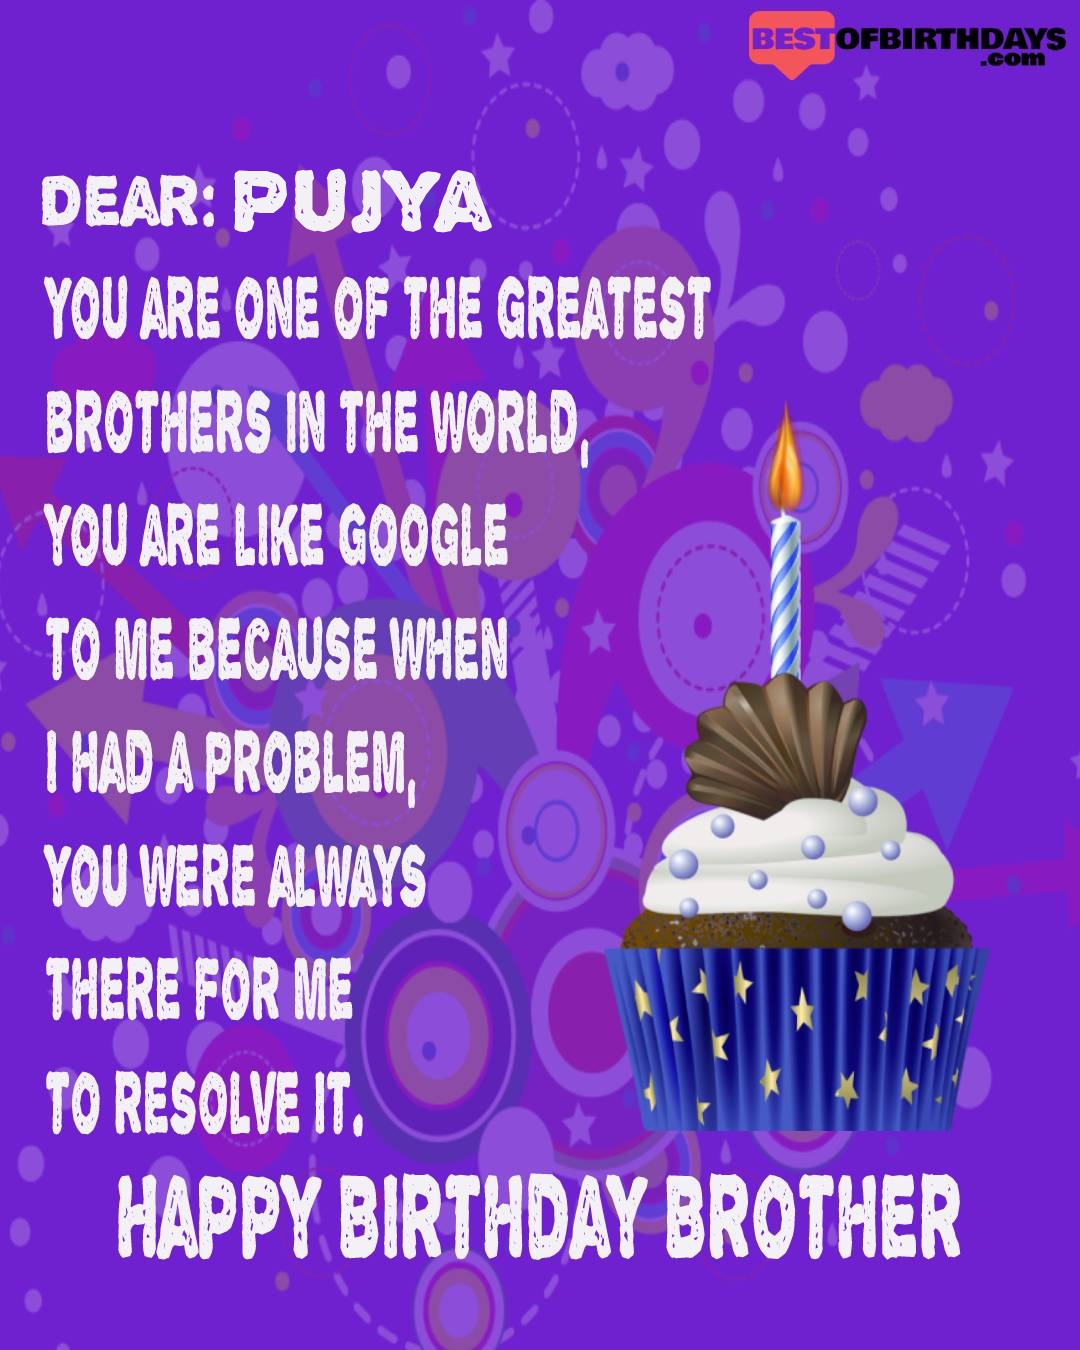 Happy birthday pujya bhai brother bro